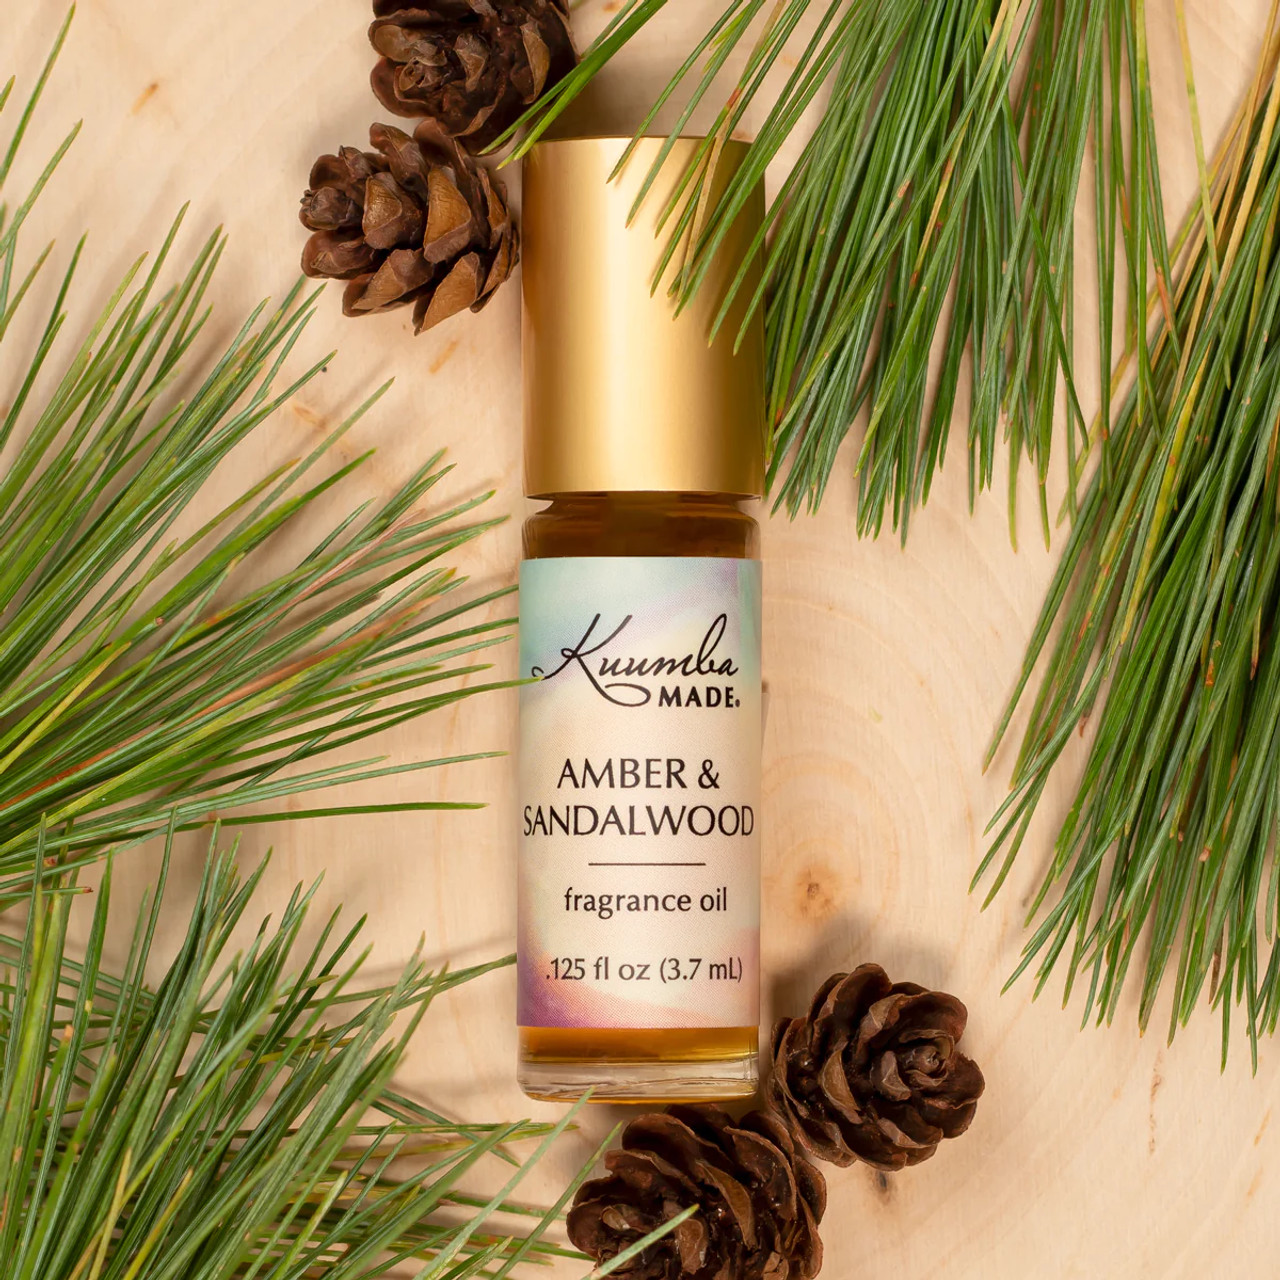 Kuumba Made Amber & Sandalwood Fragrance Oil 3.7ml - Gen C Beauty